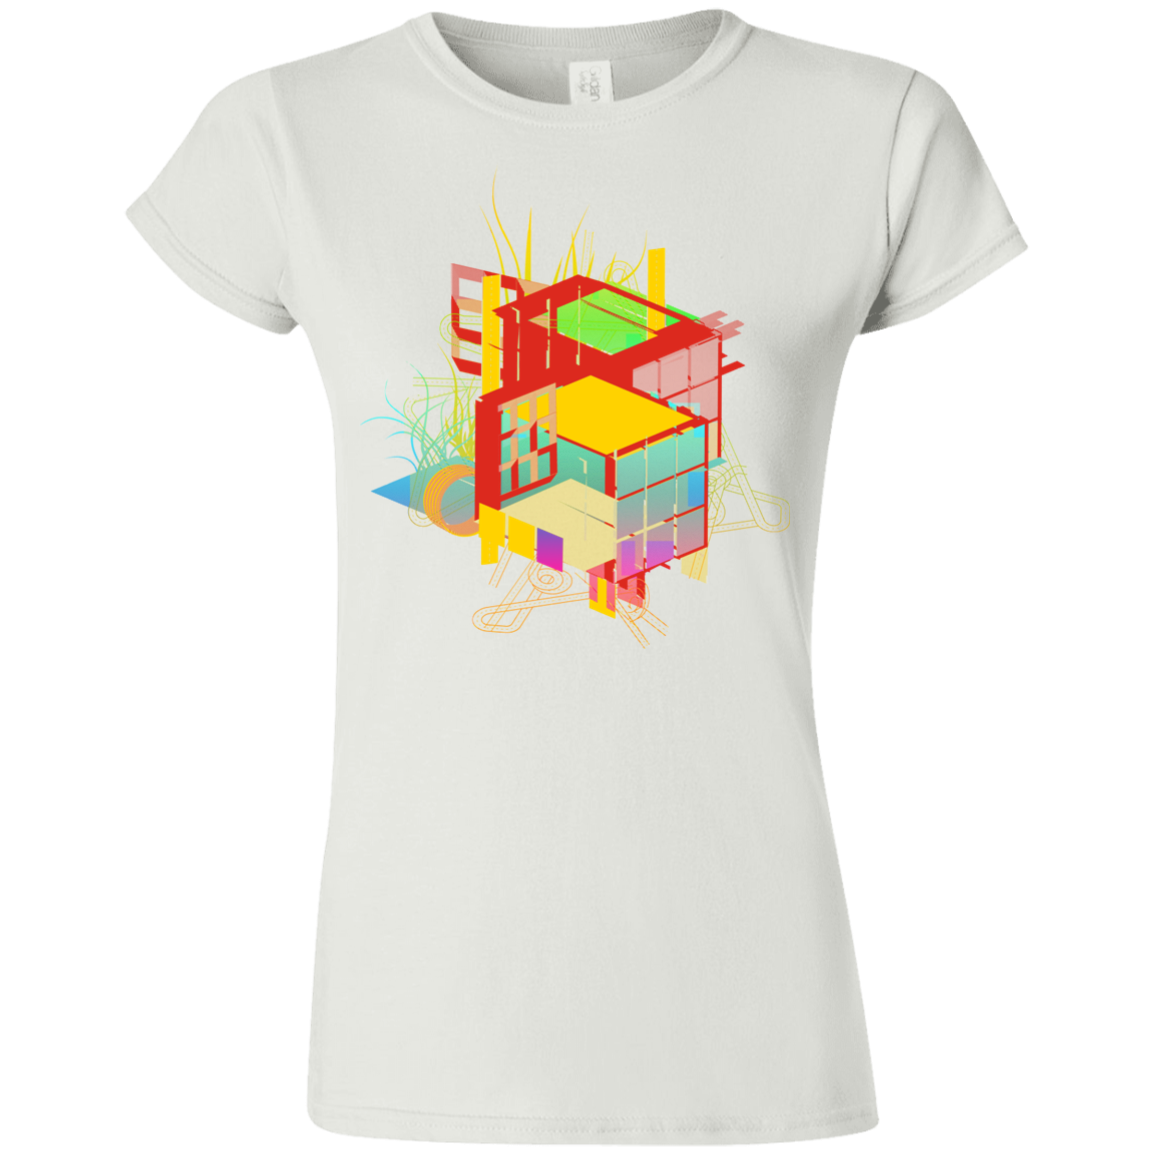 Rubik's Building Junior Slimmer-Fit T-Shirt